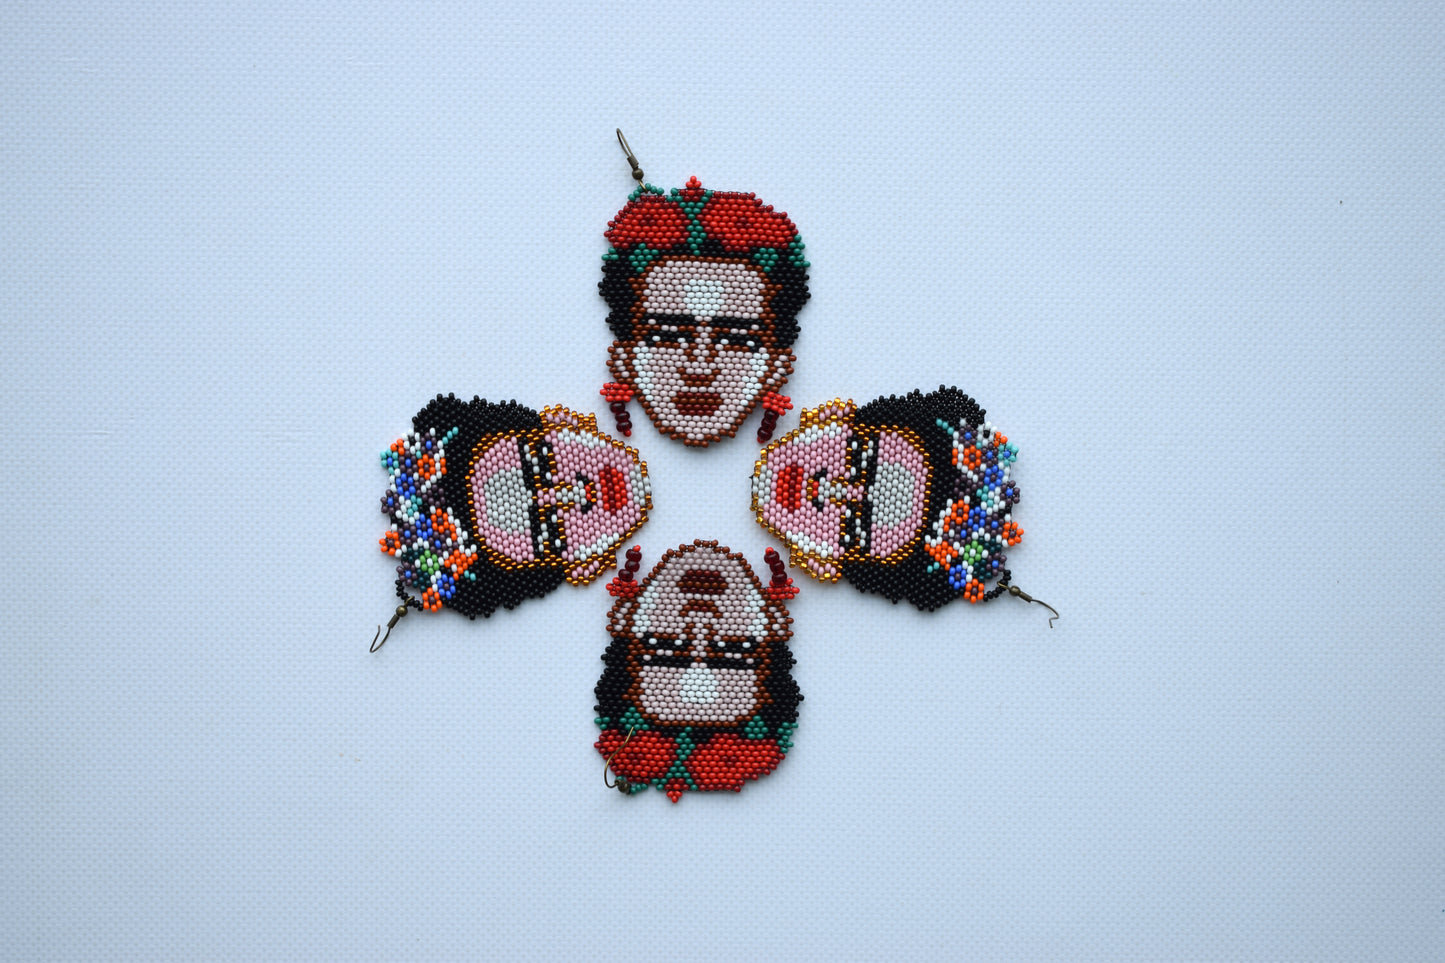 Frida Kahlo earrings